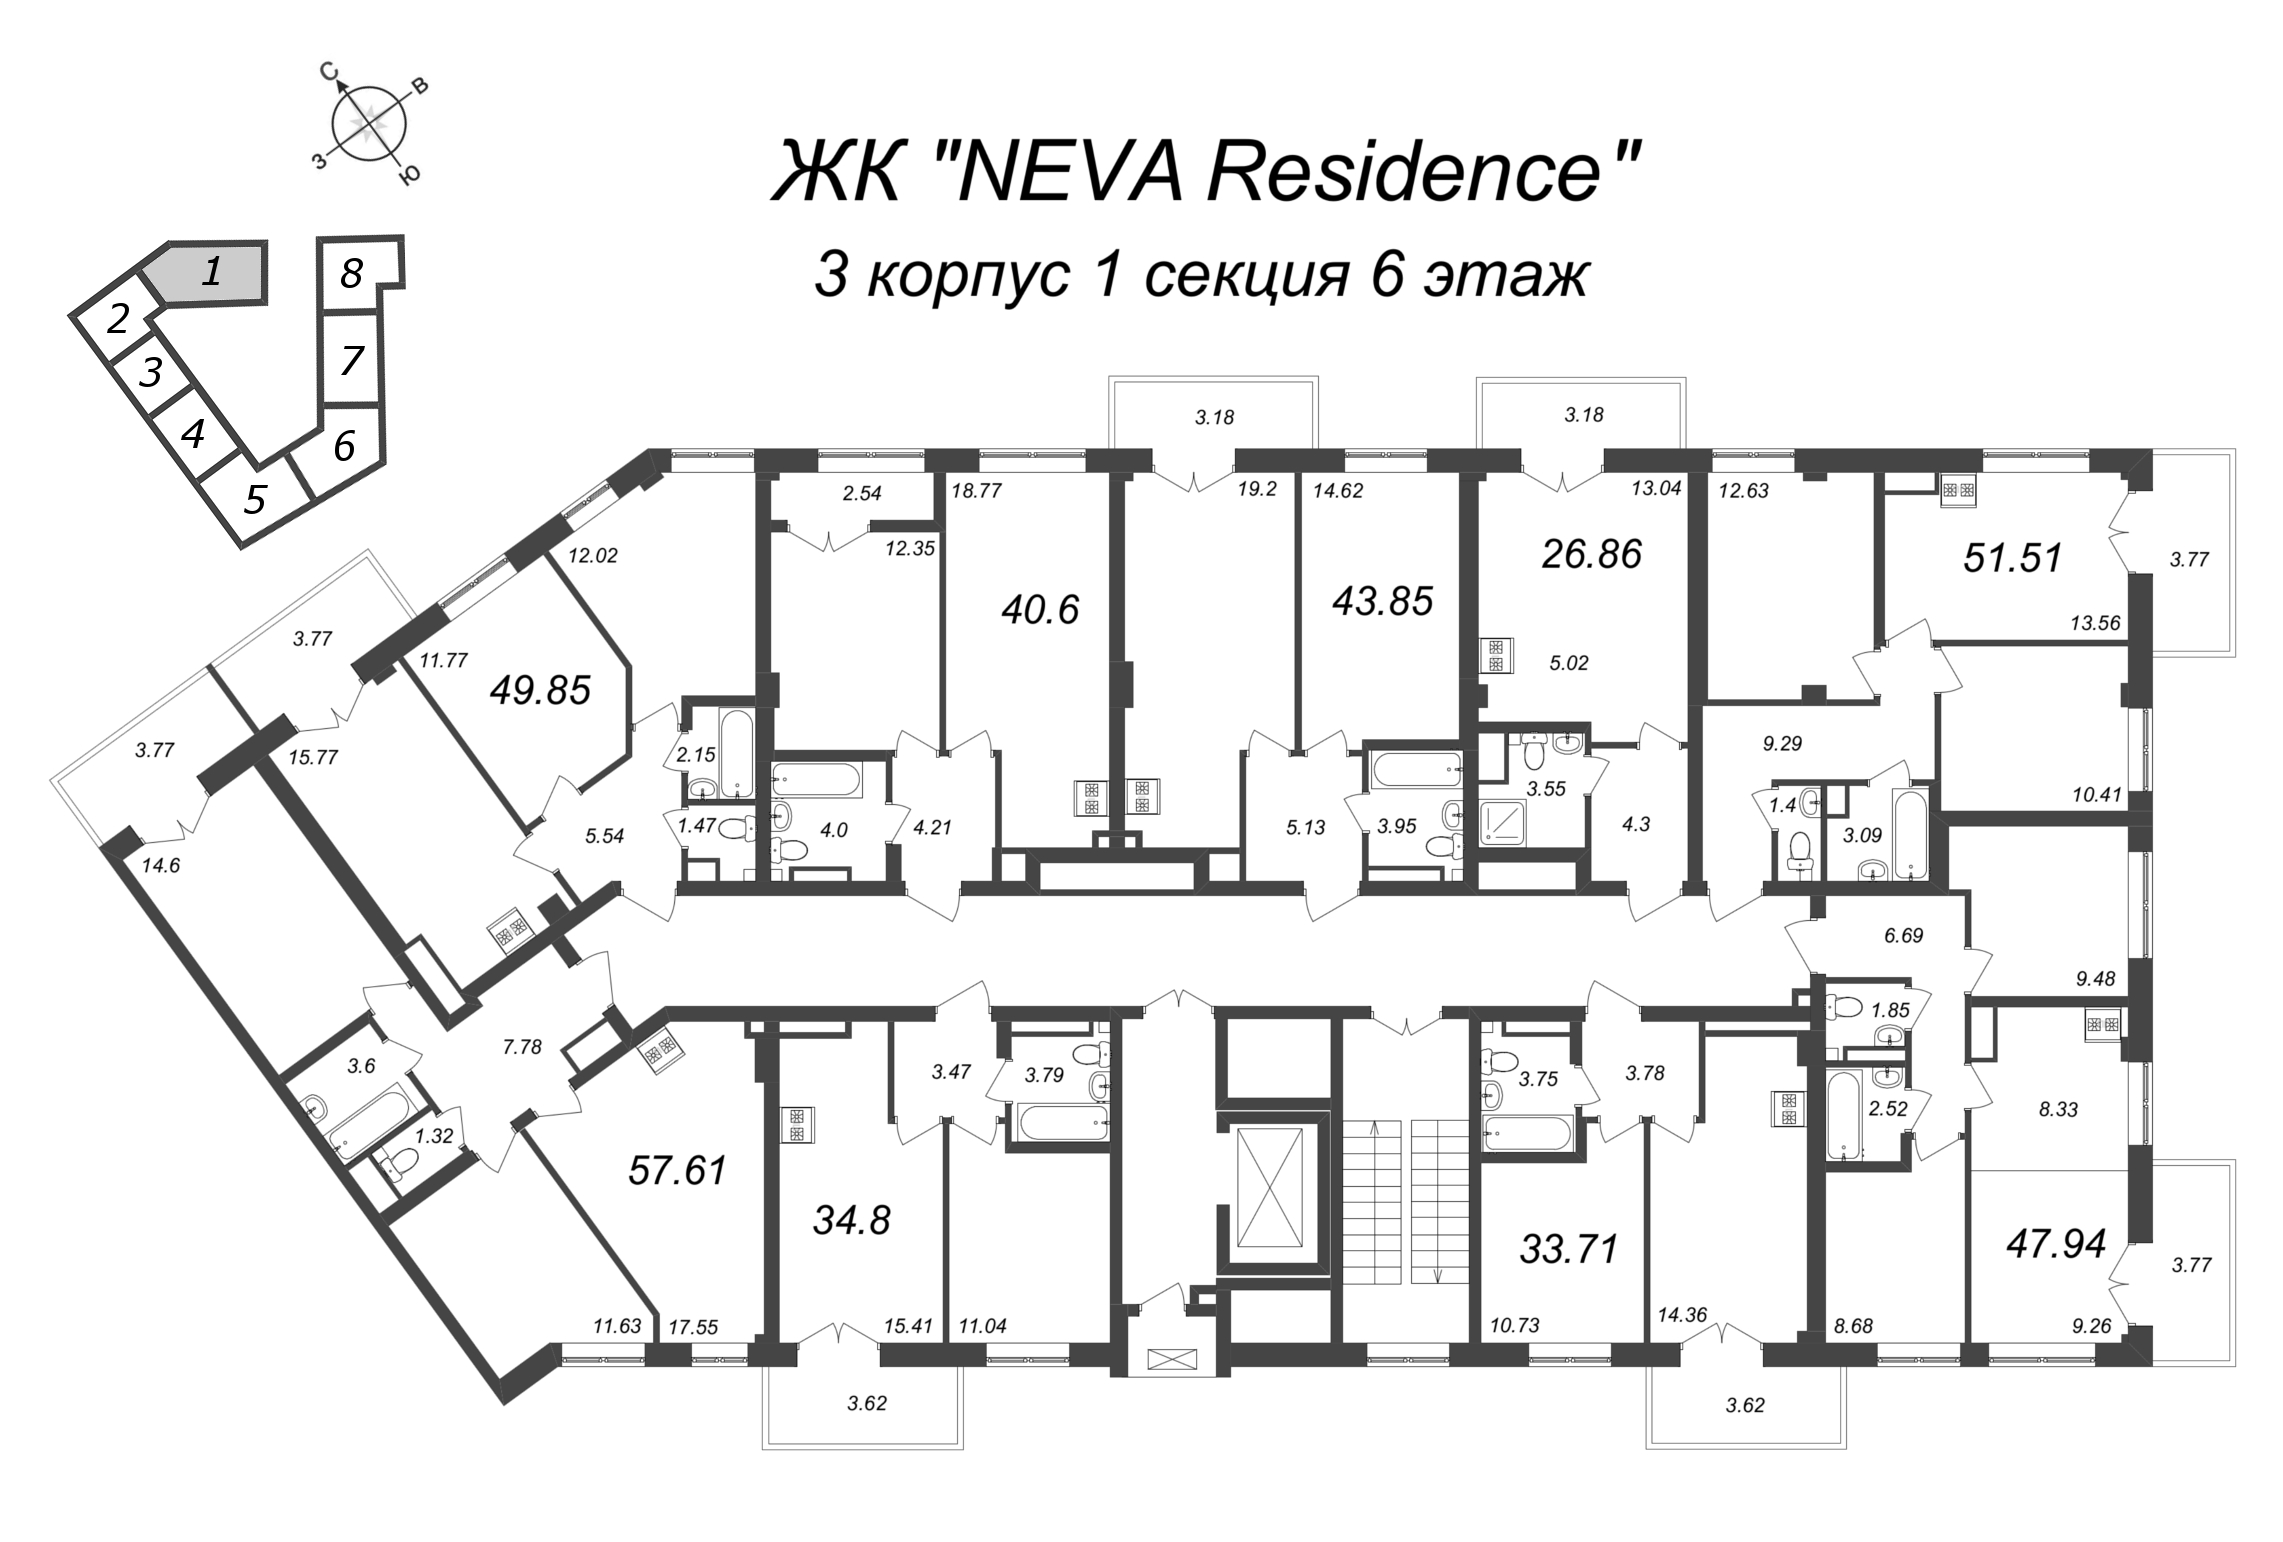 2-комнатная (Евро) квартира, 43.85 м² - планировка этажа